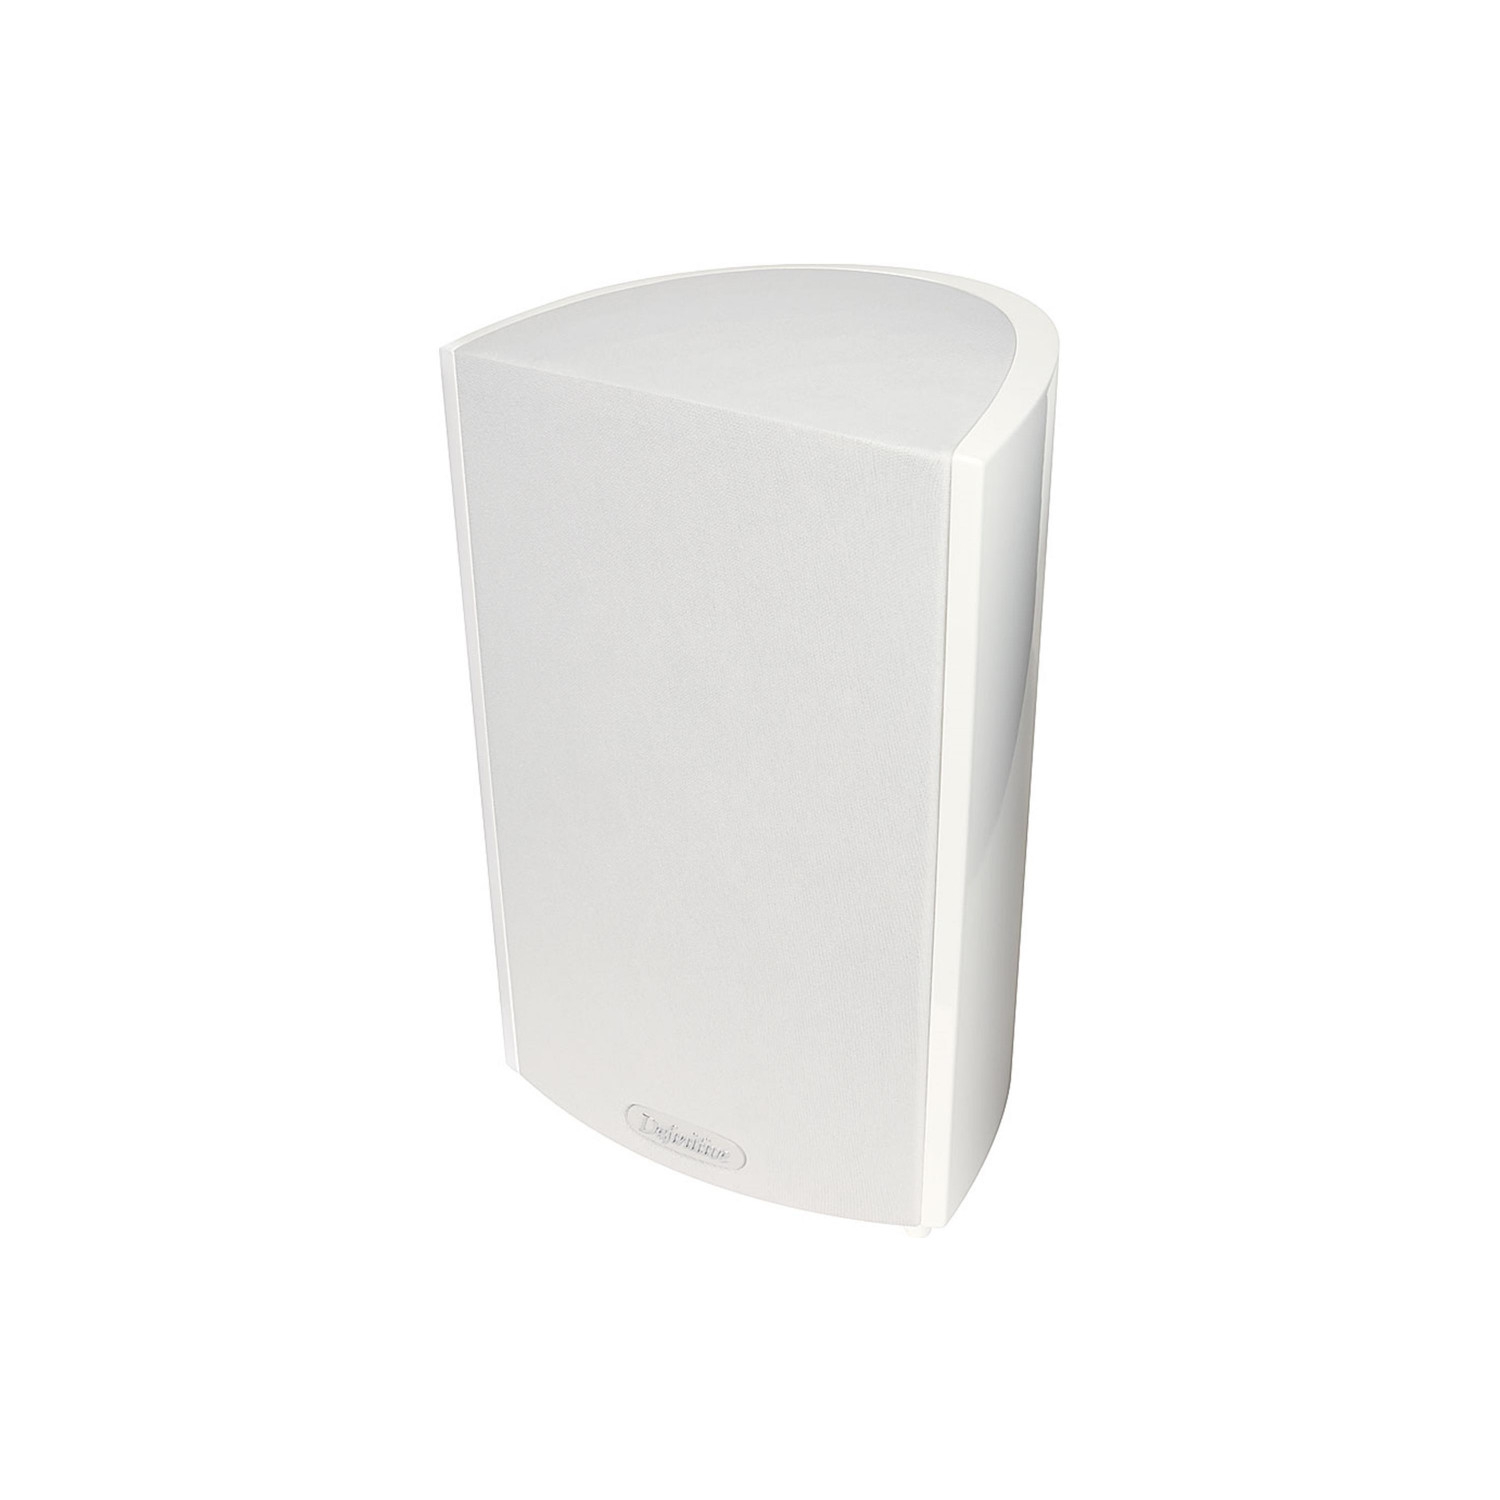 Definitive Technology Promonitor 800 Single Speaker White